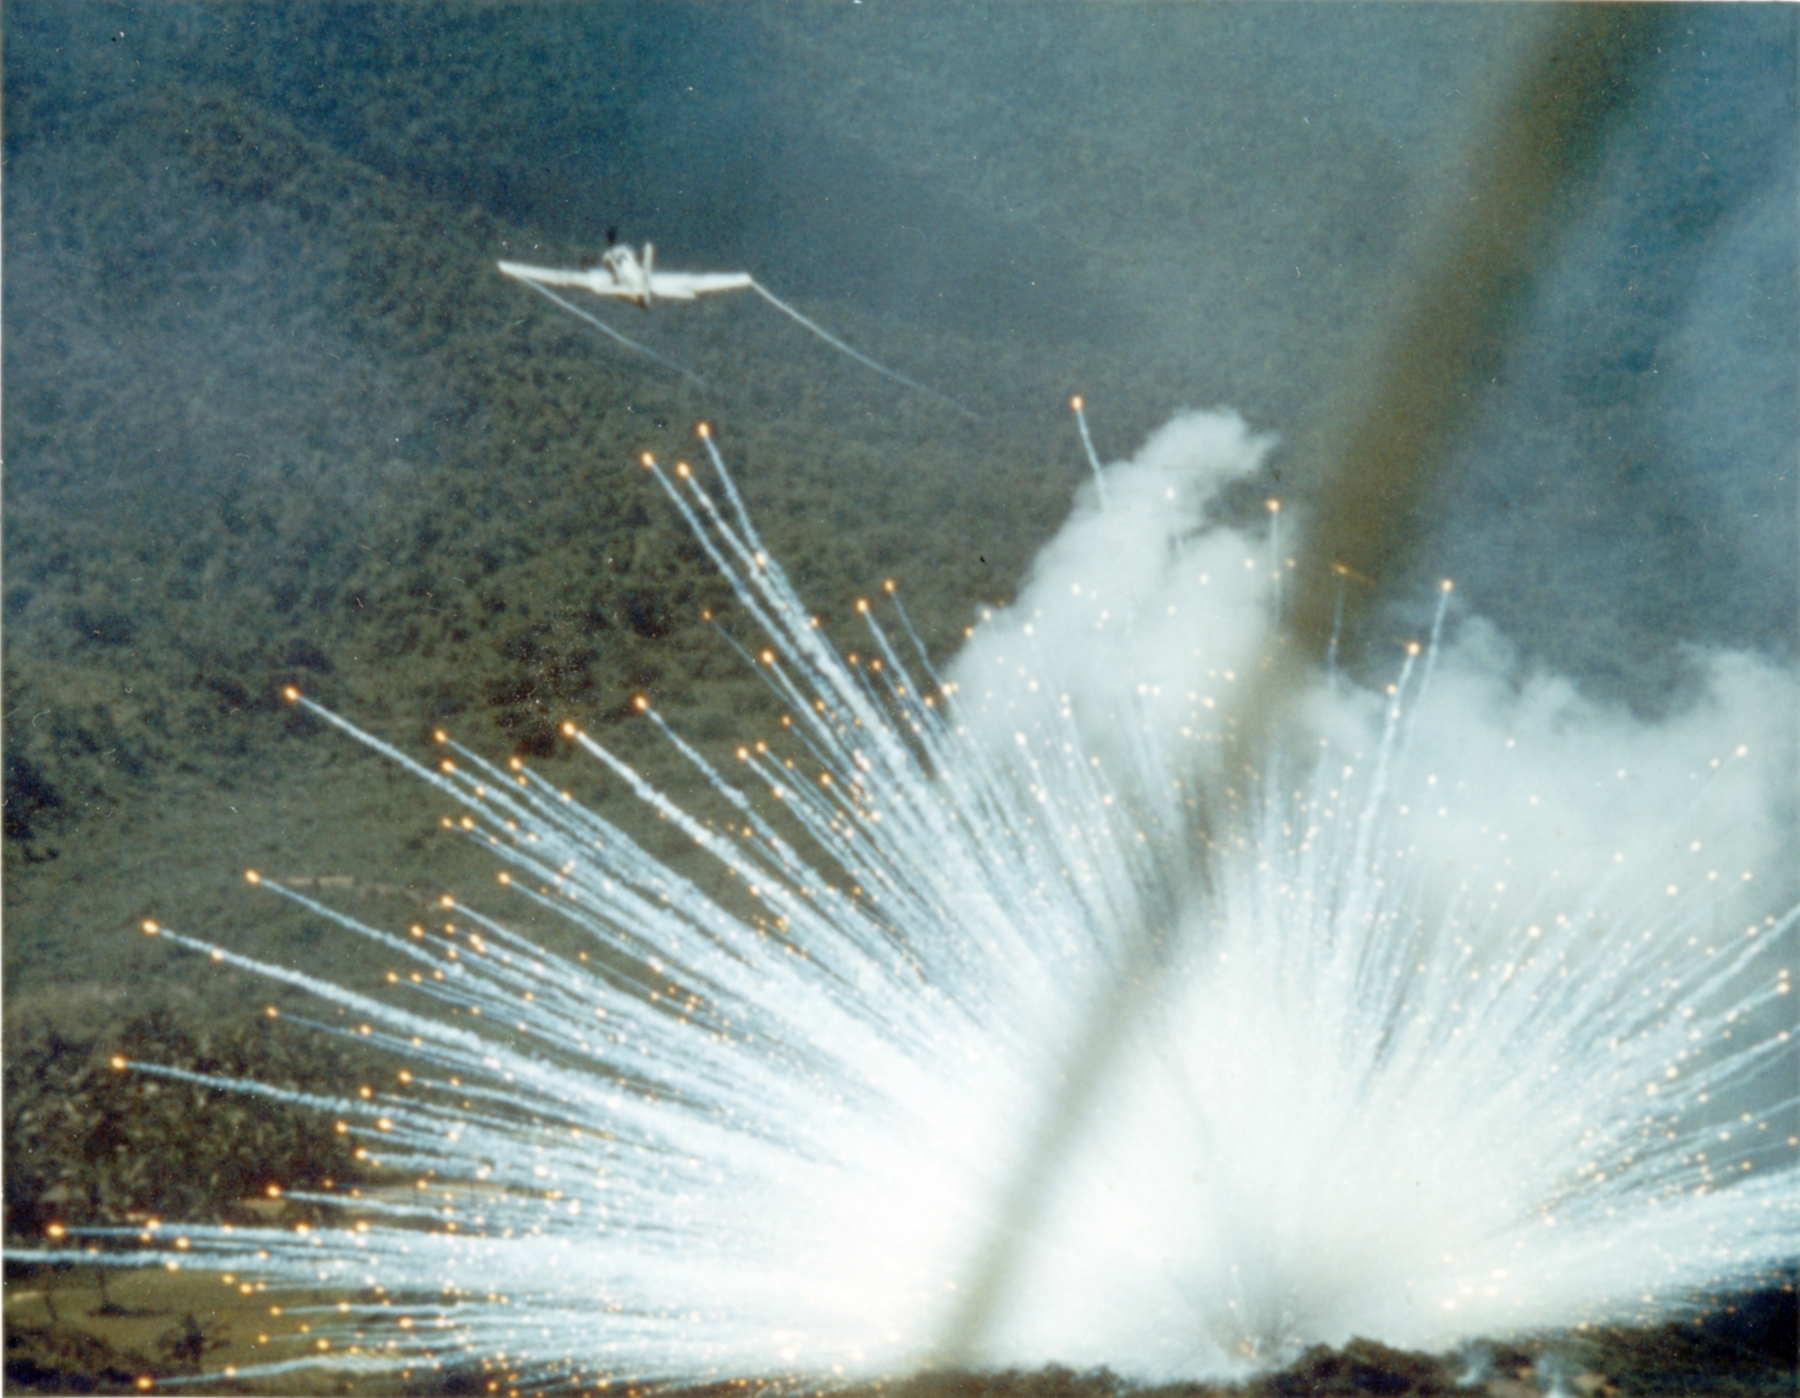 https://commons.wikimedia.org/wiki/File:A-1E_drops_white_phosphorus_bomb_1966.jpg